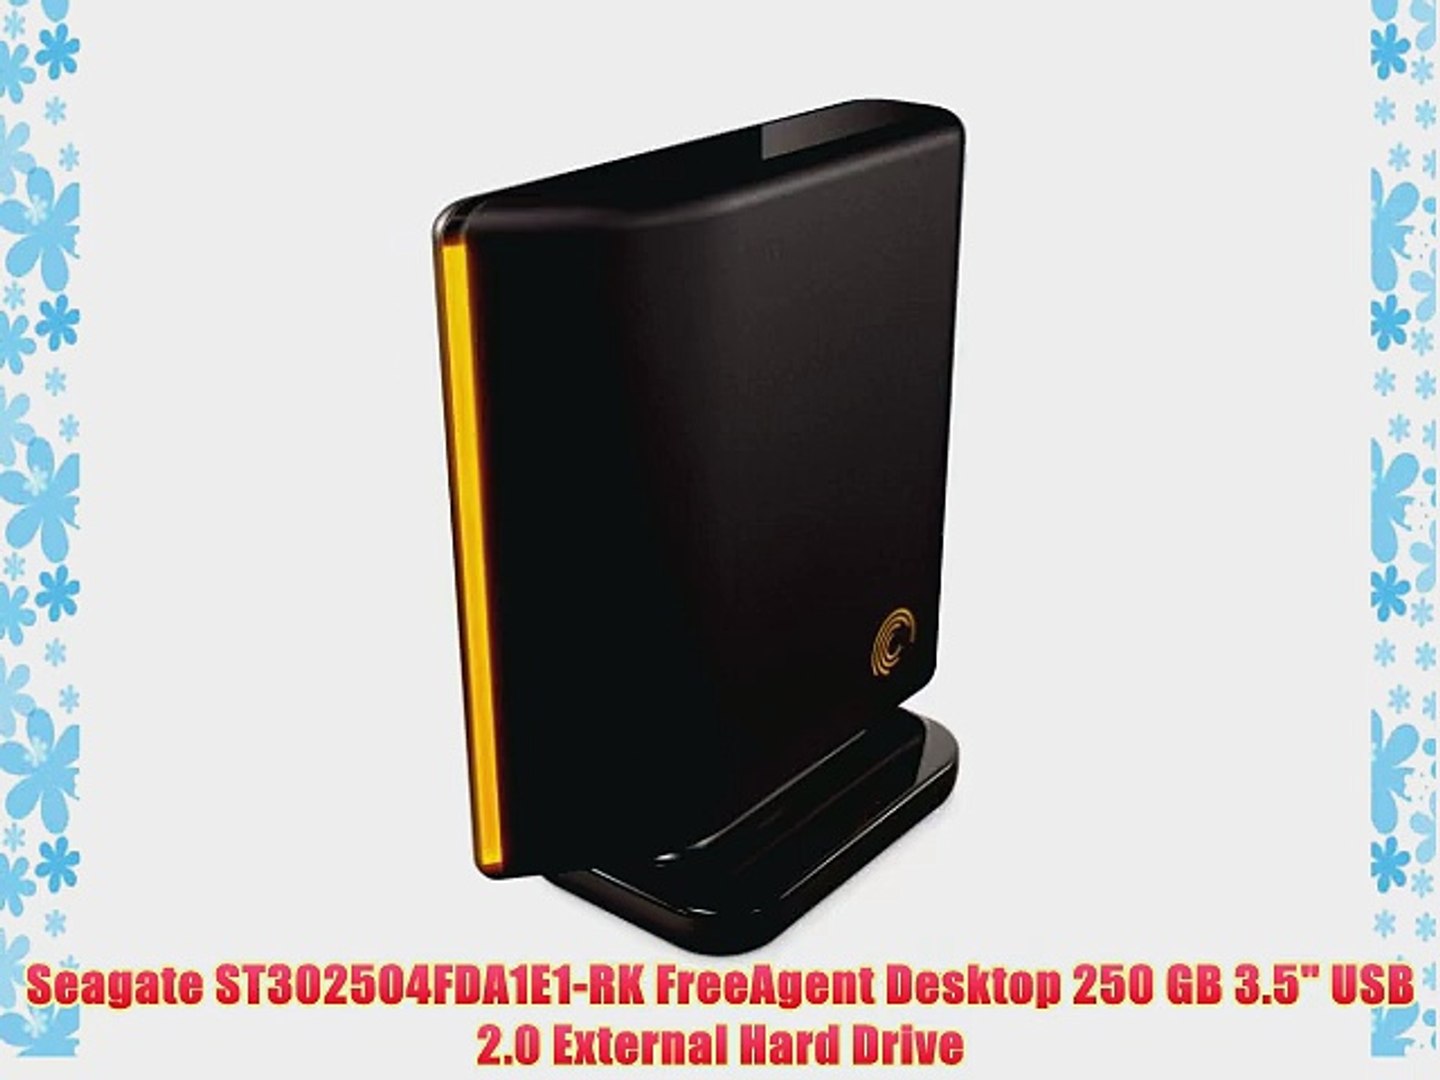 Seagate ST302504FDA1E1-RK FreeAgent Desktop 250 GB 3.5 USB 2.0 External  Hard Drive - video Dailymotion